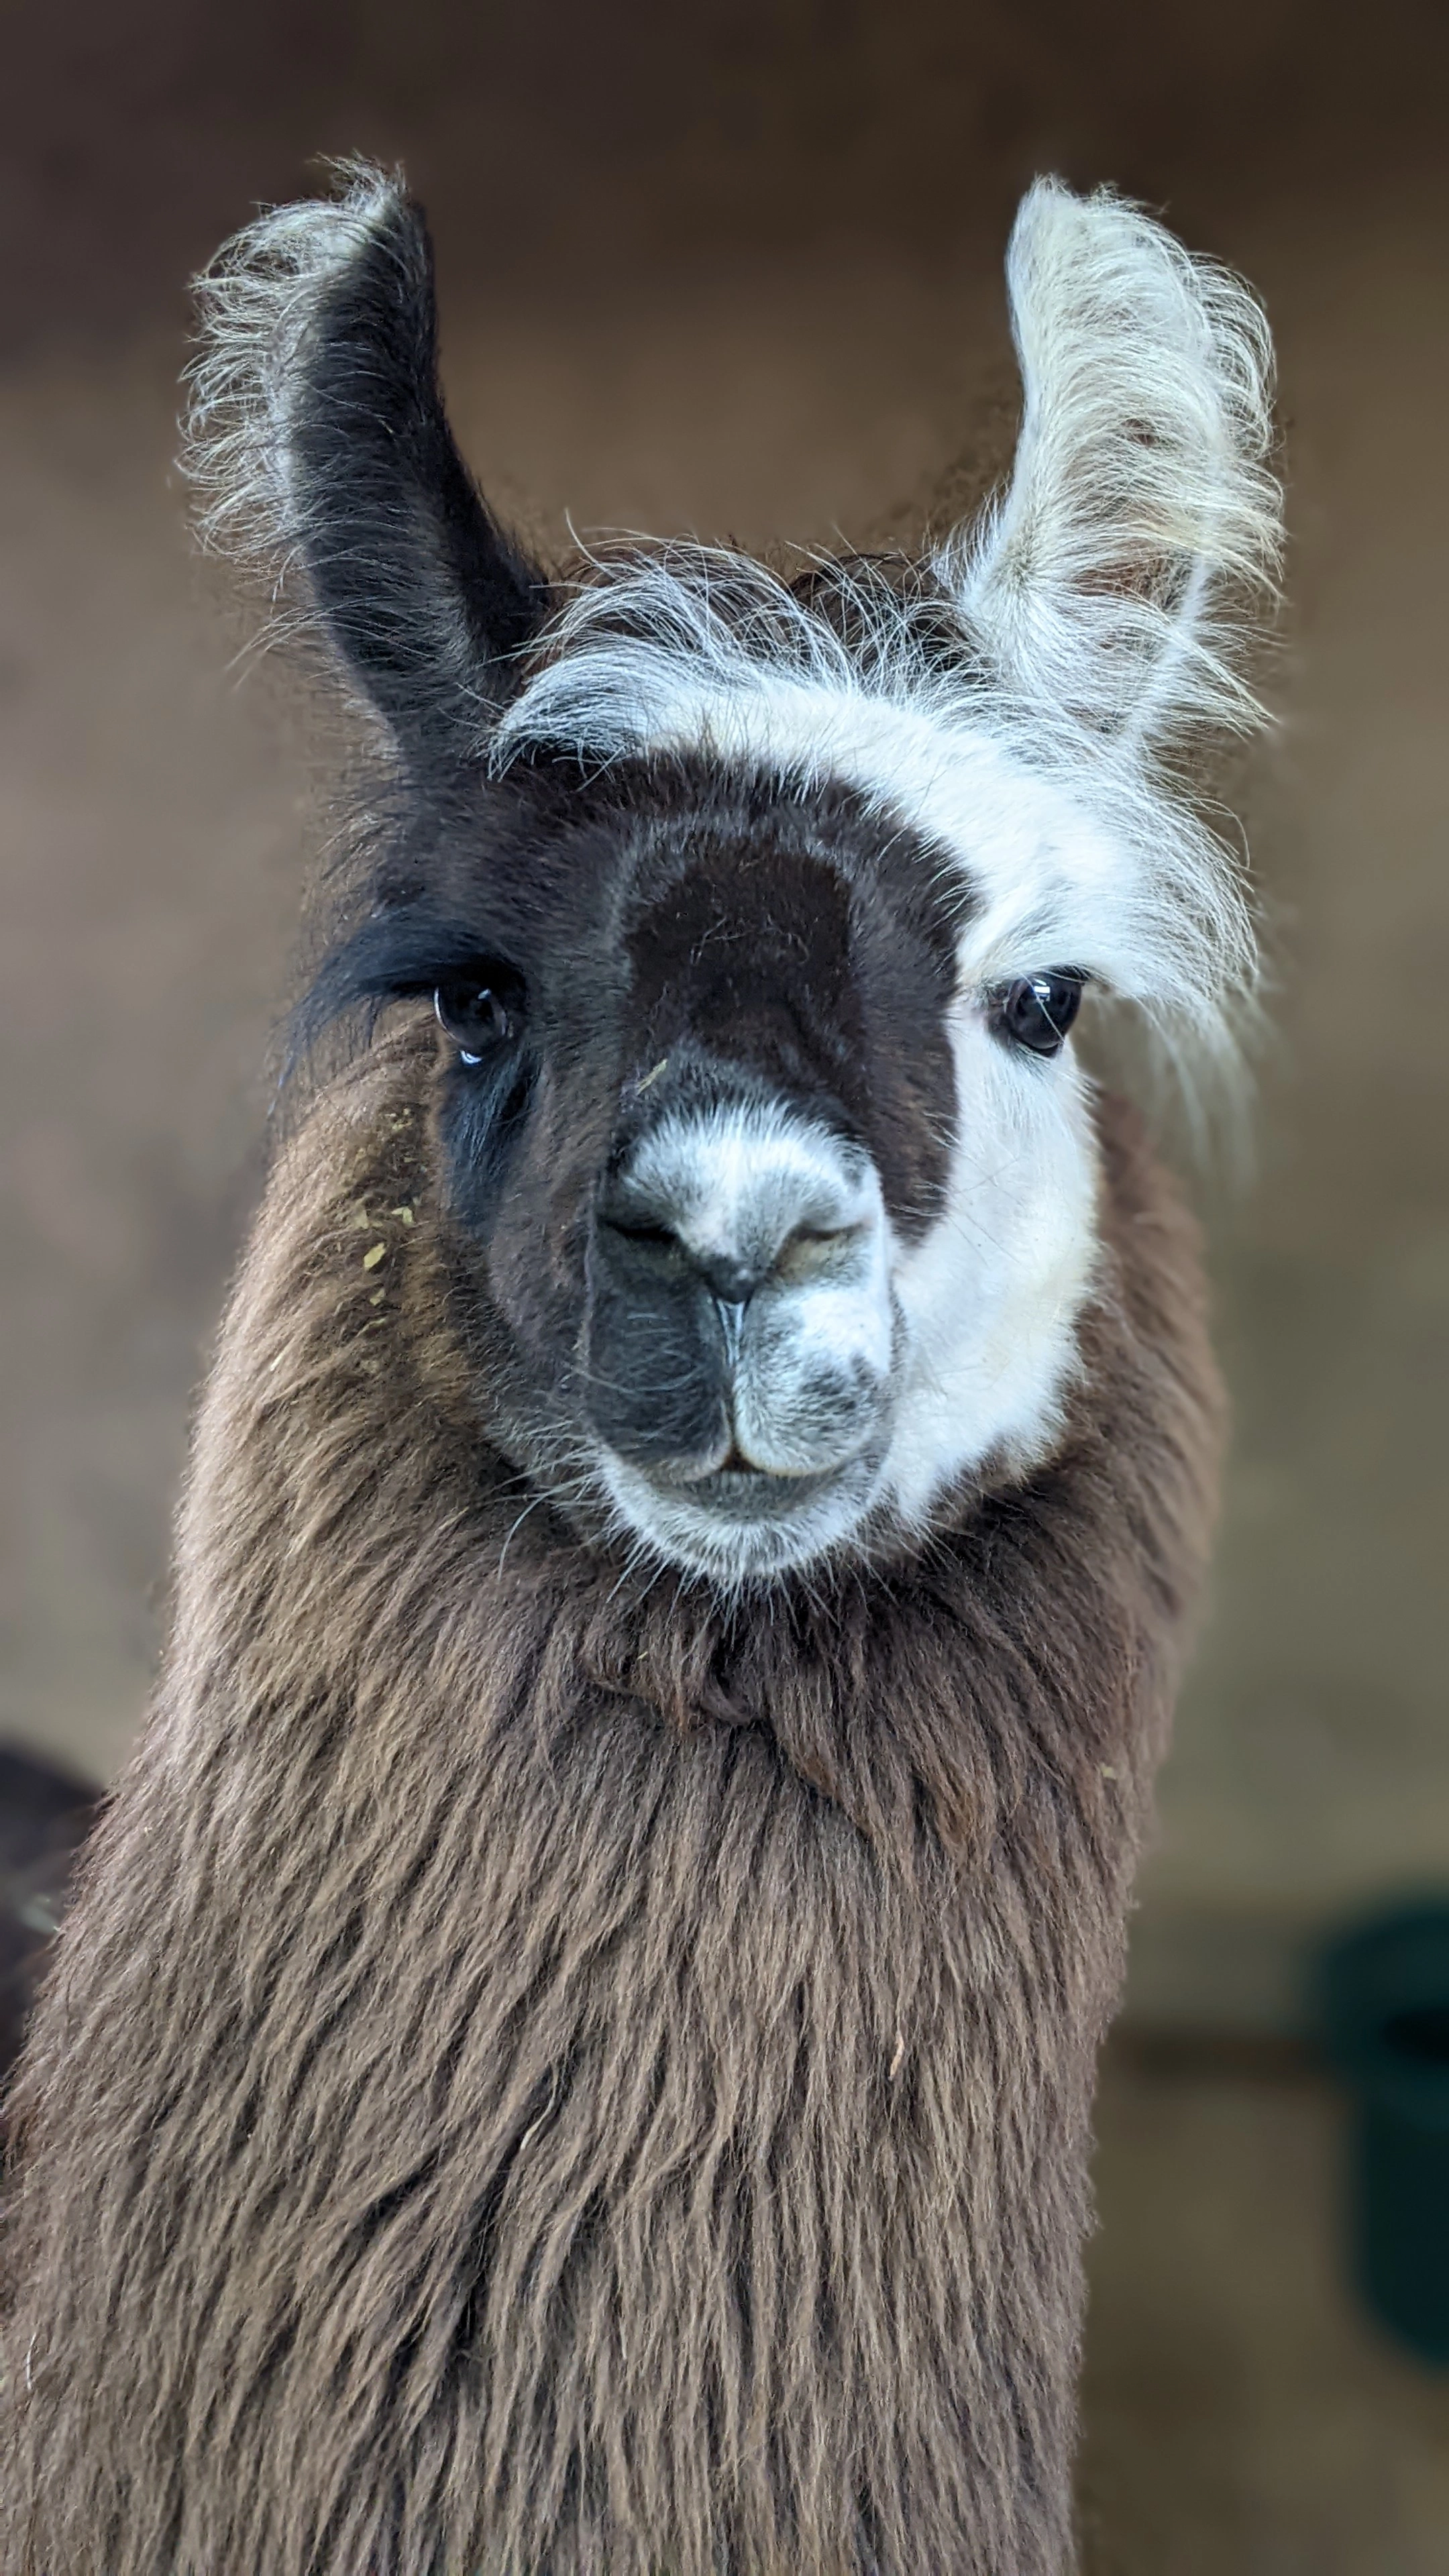 A portrait image of a llama named Kabooki